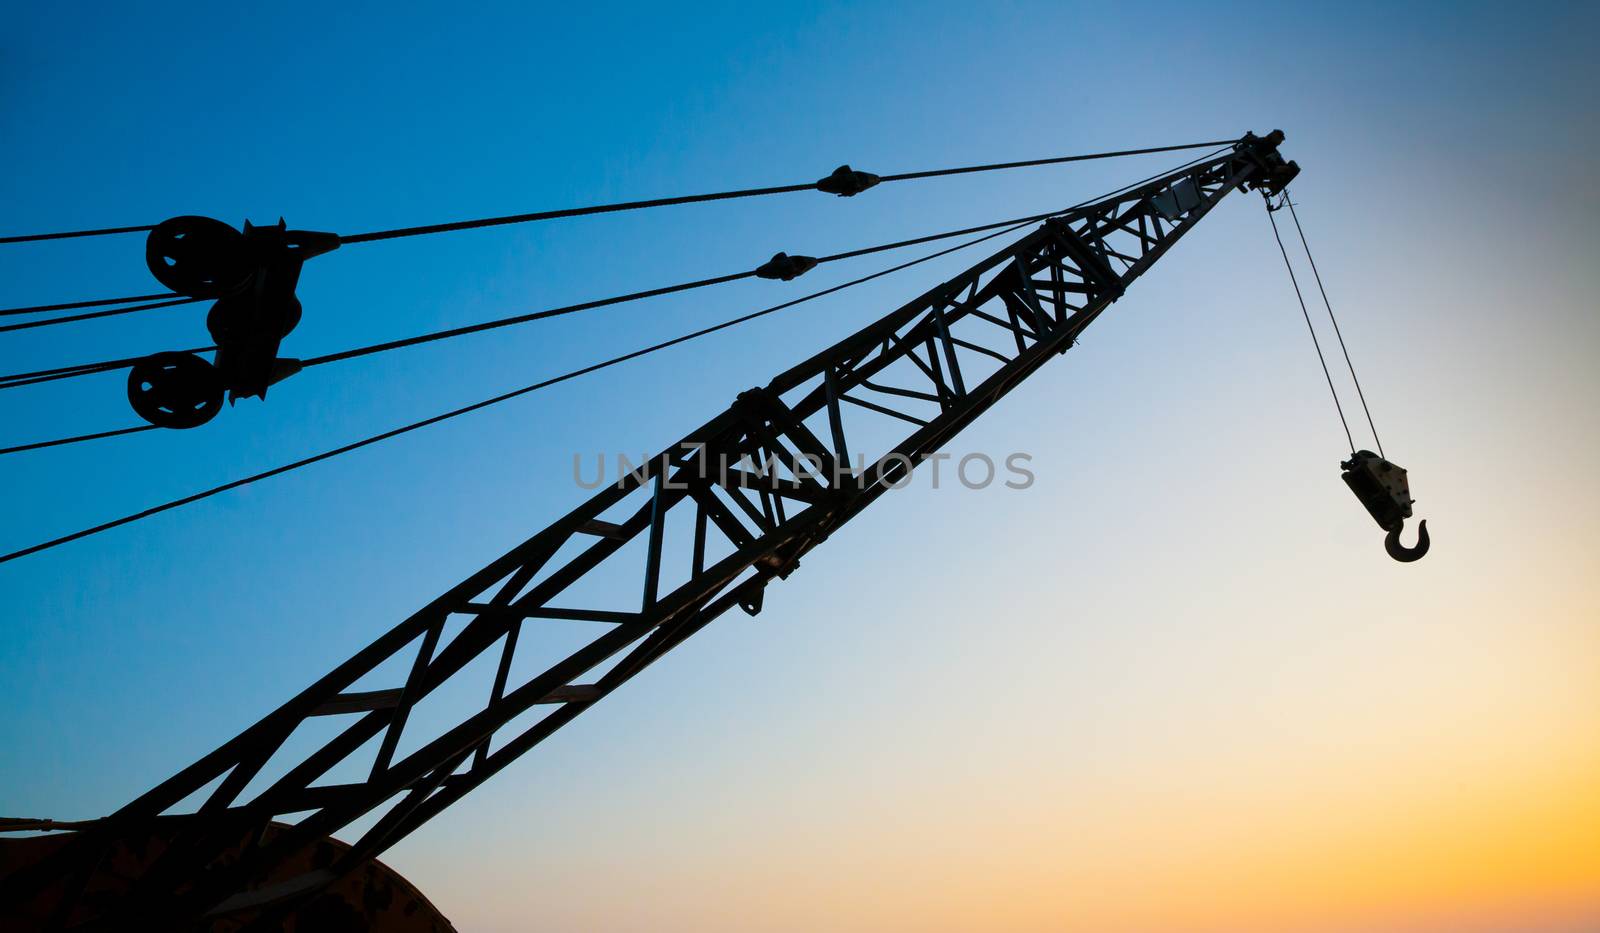 Crane Arm at Sunset by patrickstock